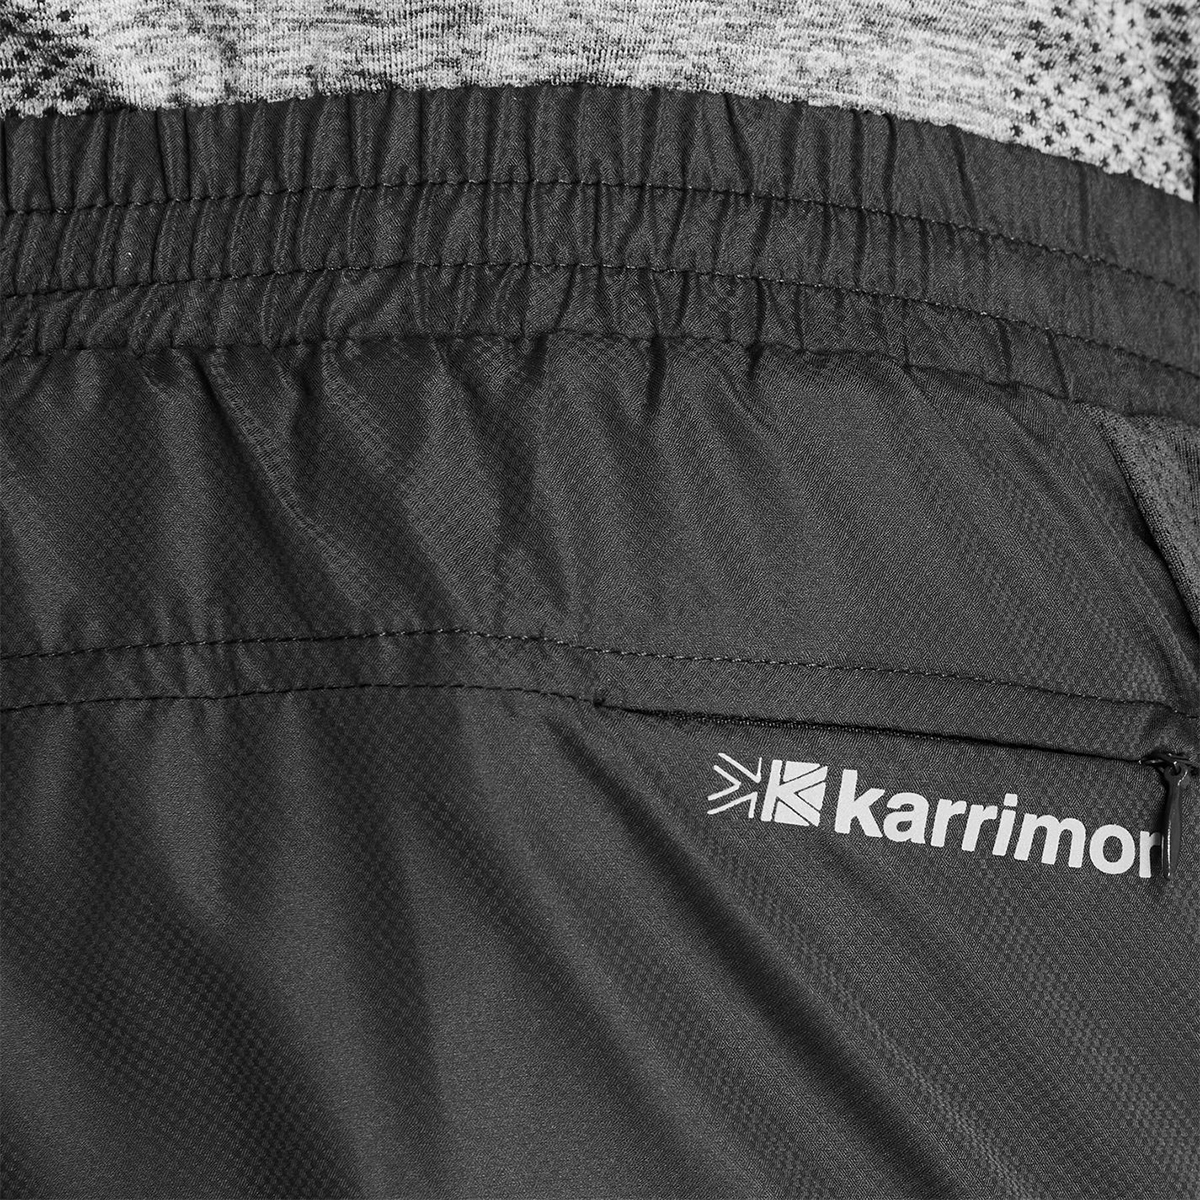 Karrimor 2 in 1 Shorts